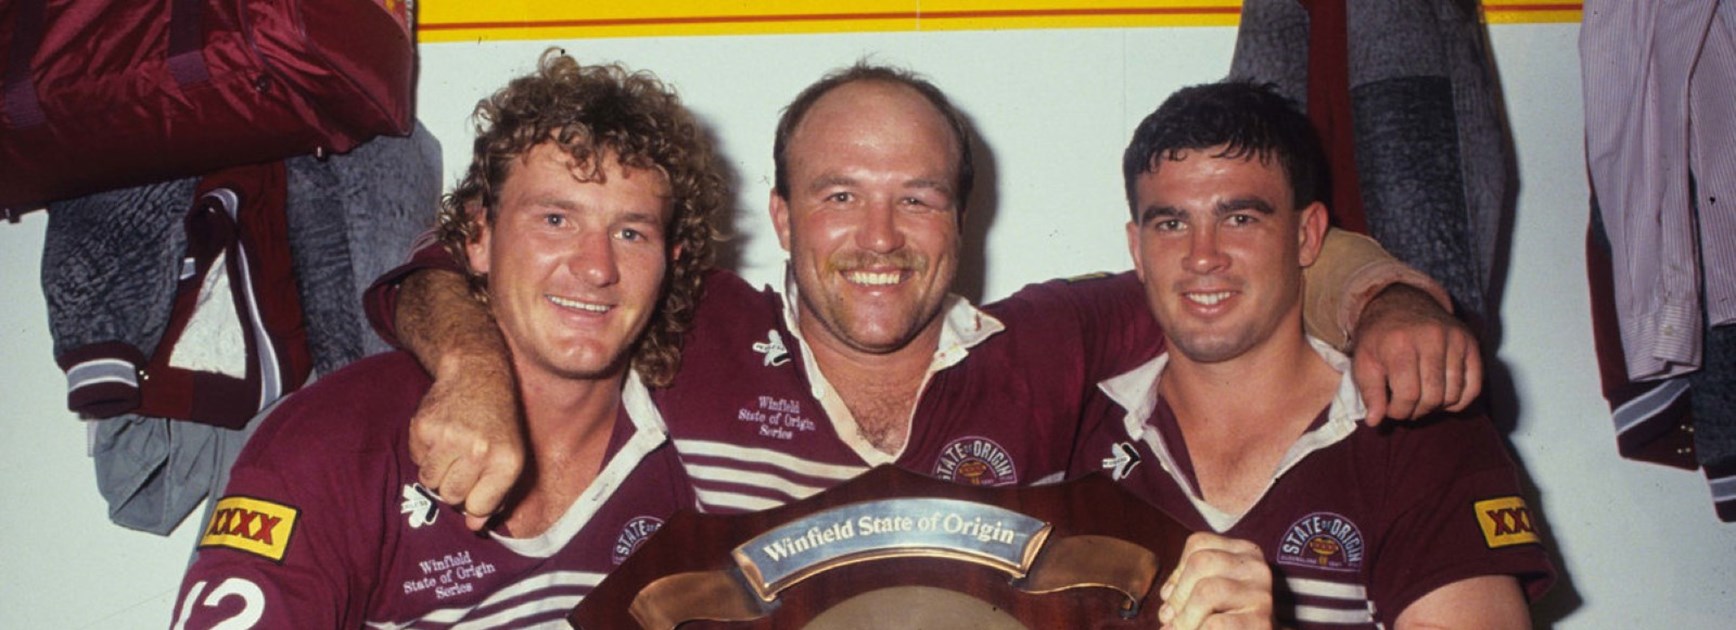 Foggy memories: 1991 - Queensland regain the Origin shield